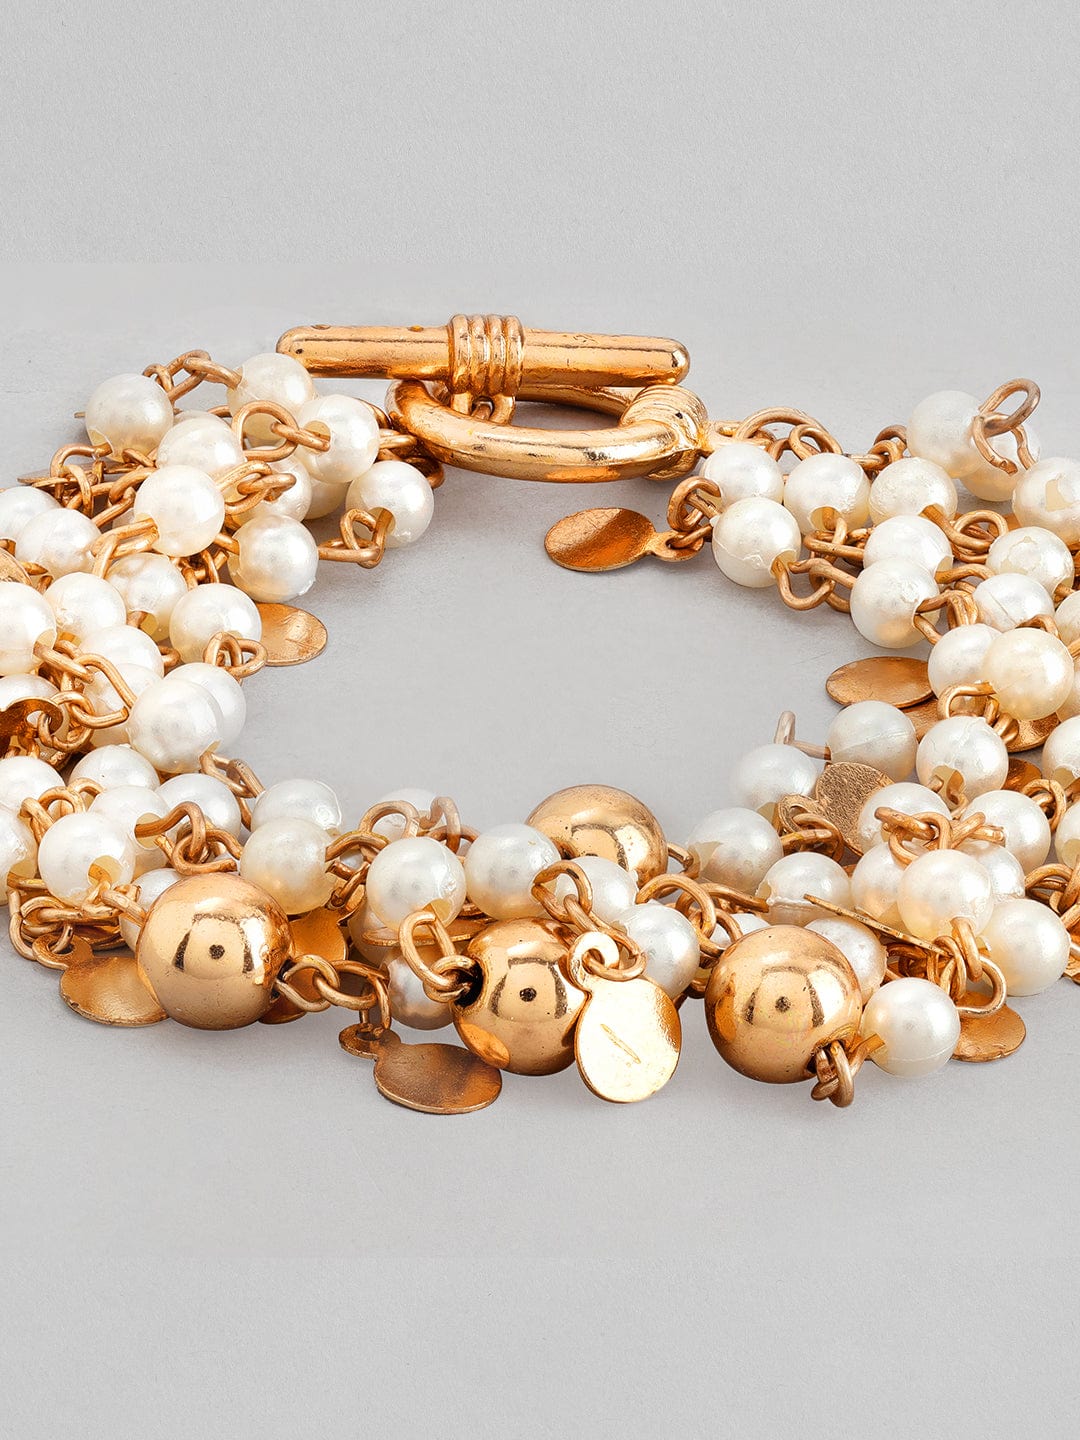 Rubans Voguish Women Gold-Toned  White Tasselled Gold-Plated Multistrand Bracelet Bracelets